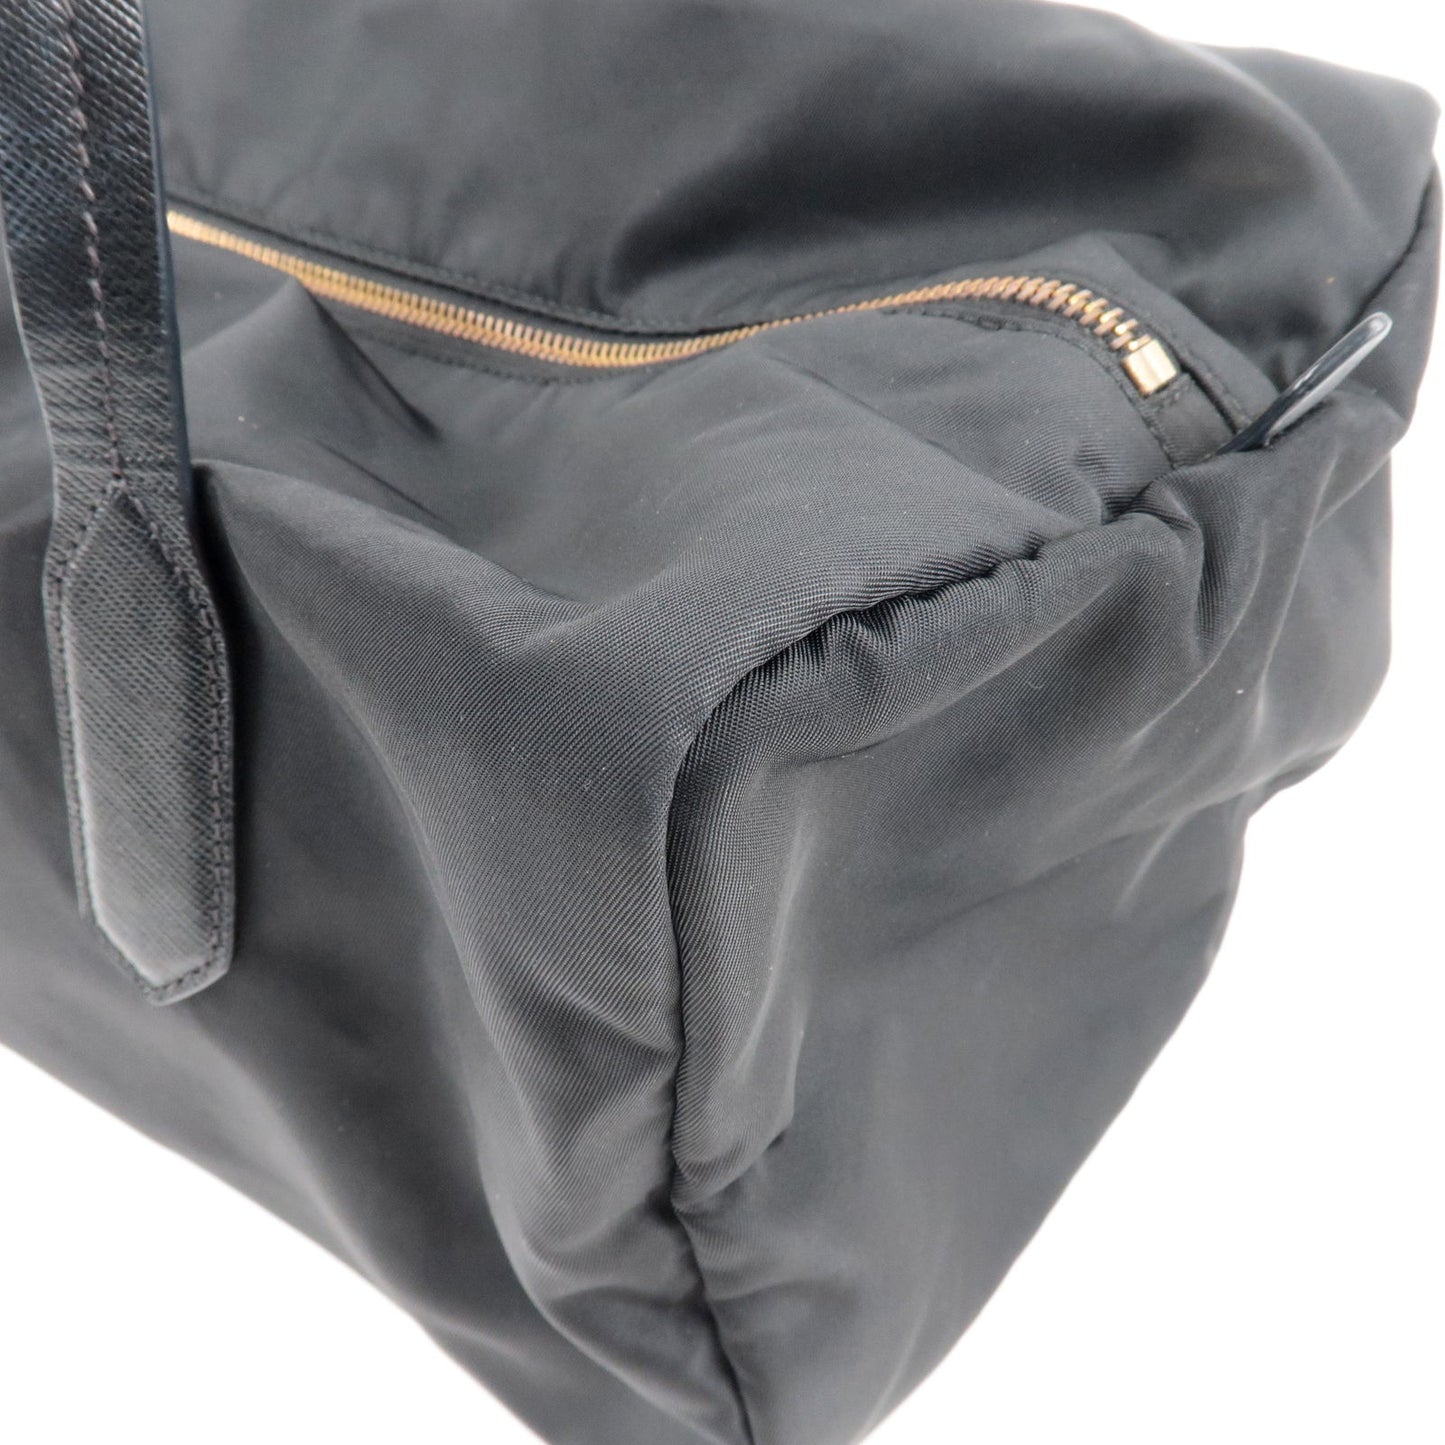 PRADA-Logo-Nylon-Leather-Boston-Bag-Hand-Bag-Black-BL0567 – dct